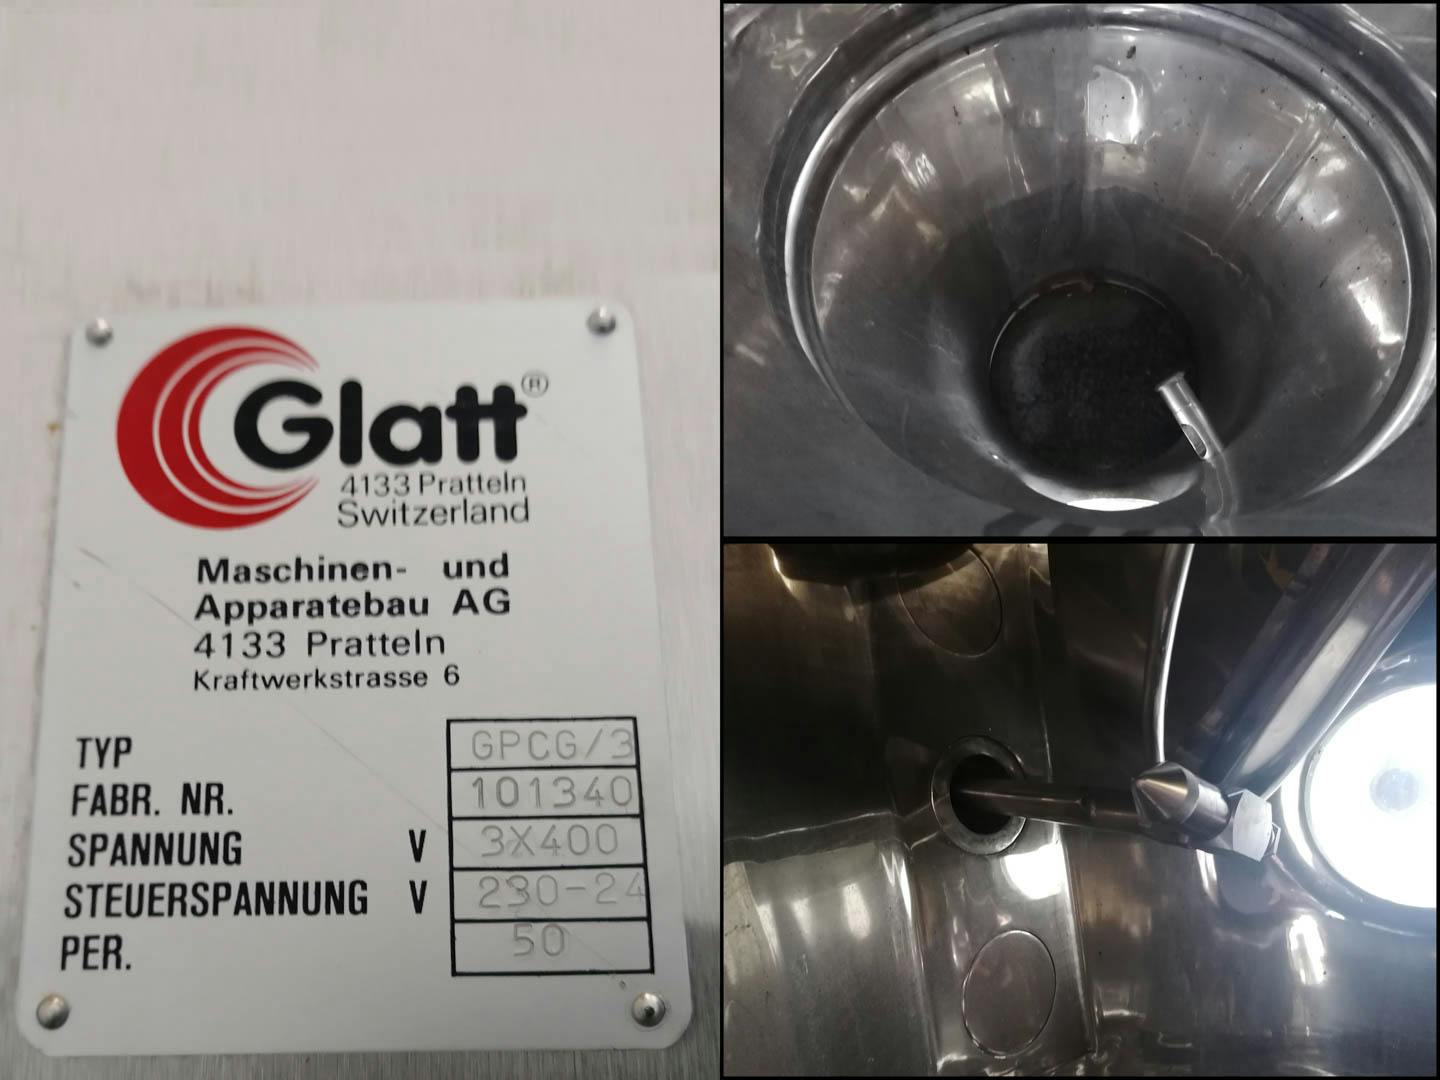 Glatt GPCG/3-15 - Sušicka s fluidním ložem dávková - image 15